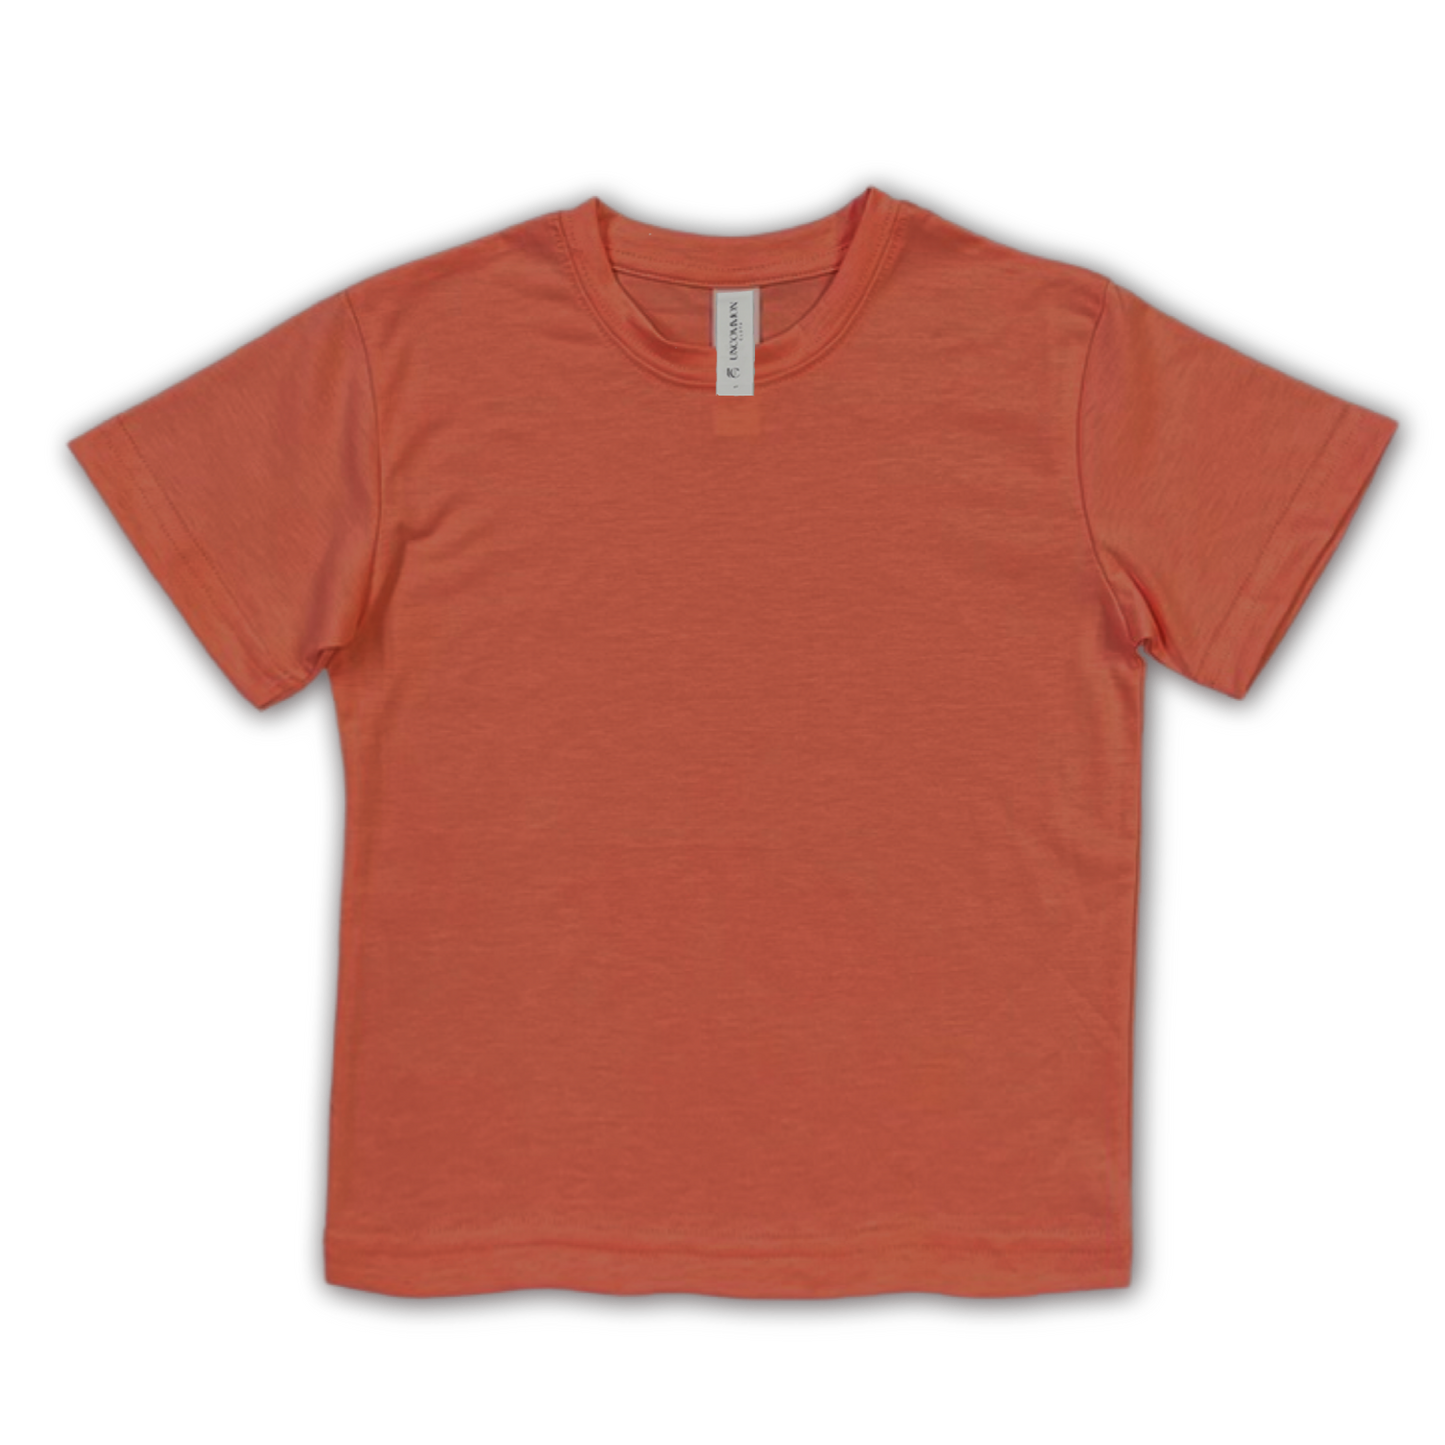 Toddler Unisex Short Sleeve T-Shirt Blank